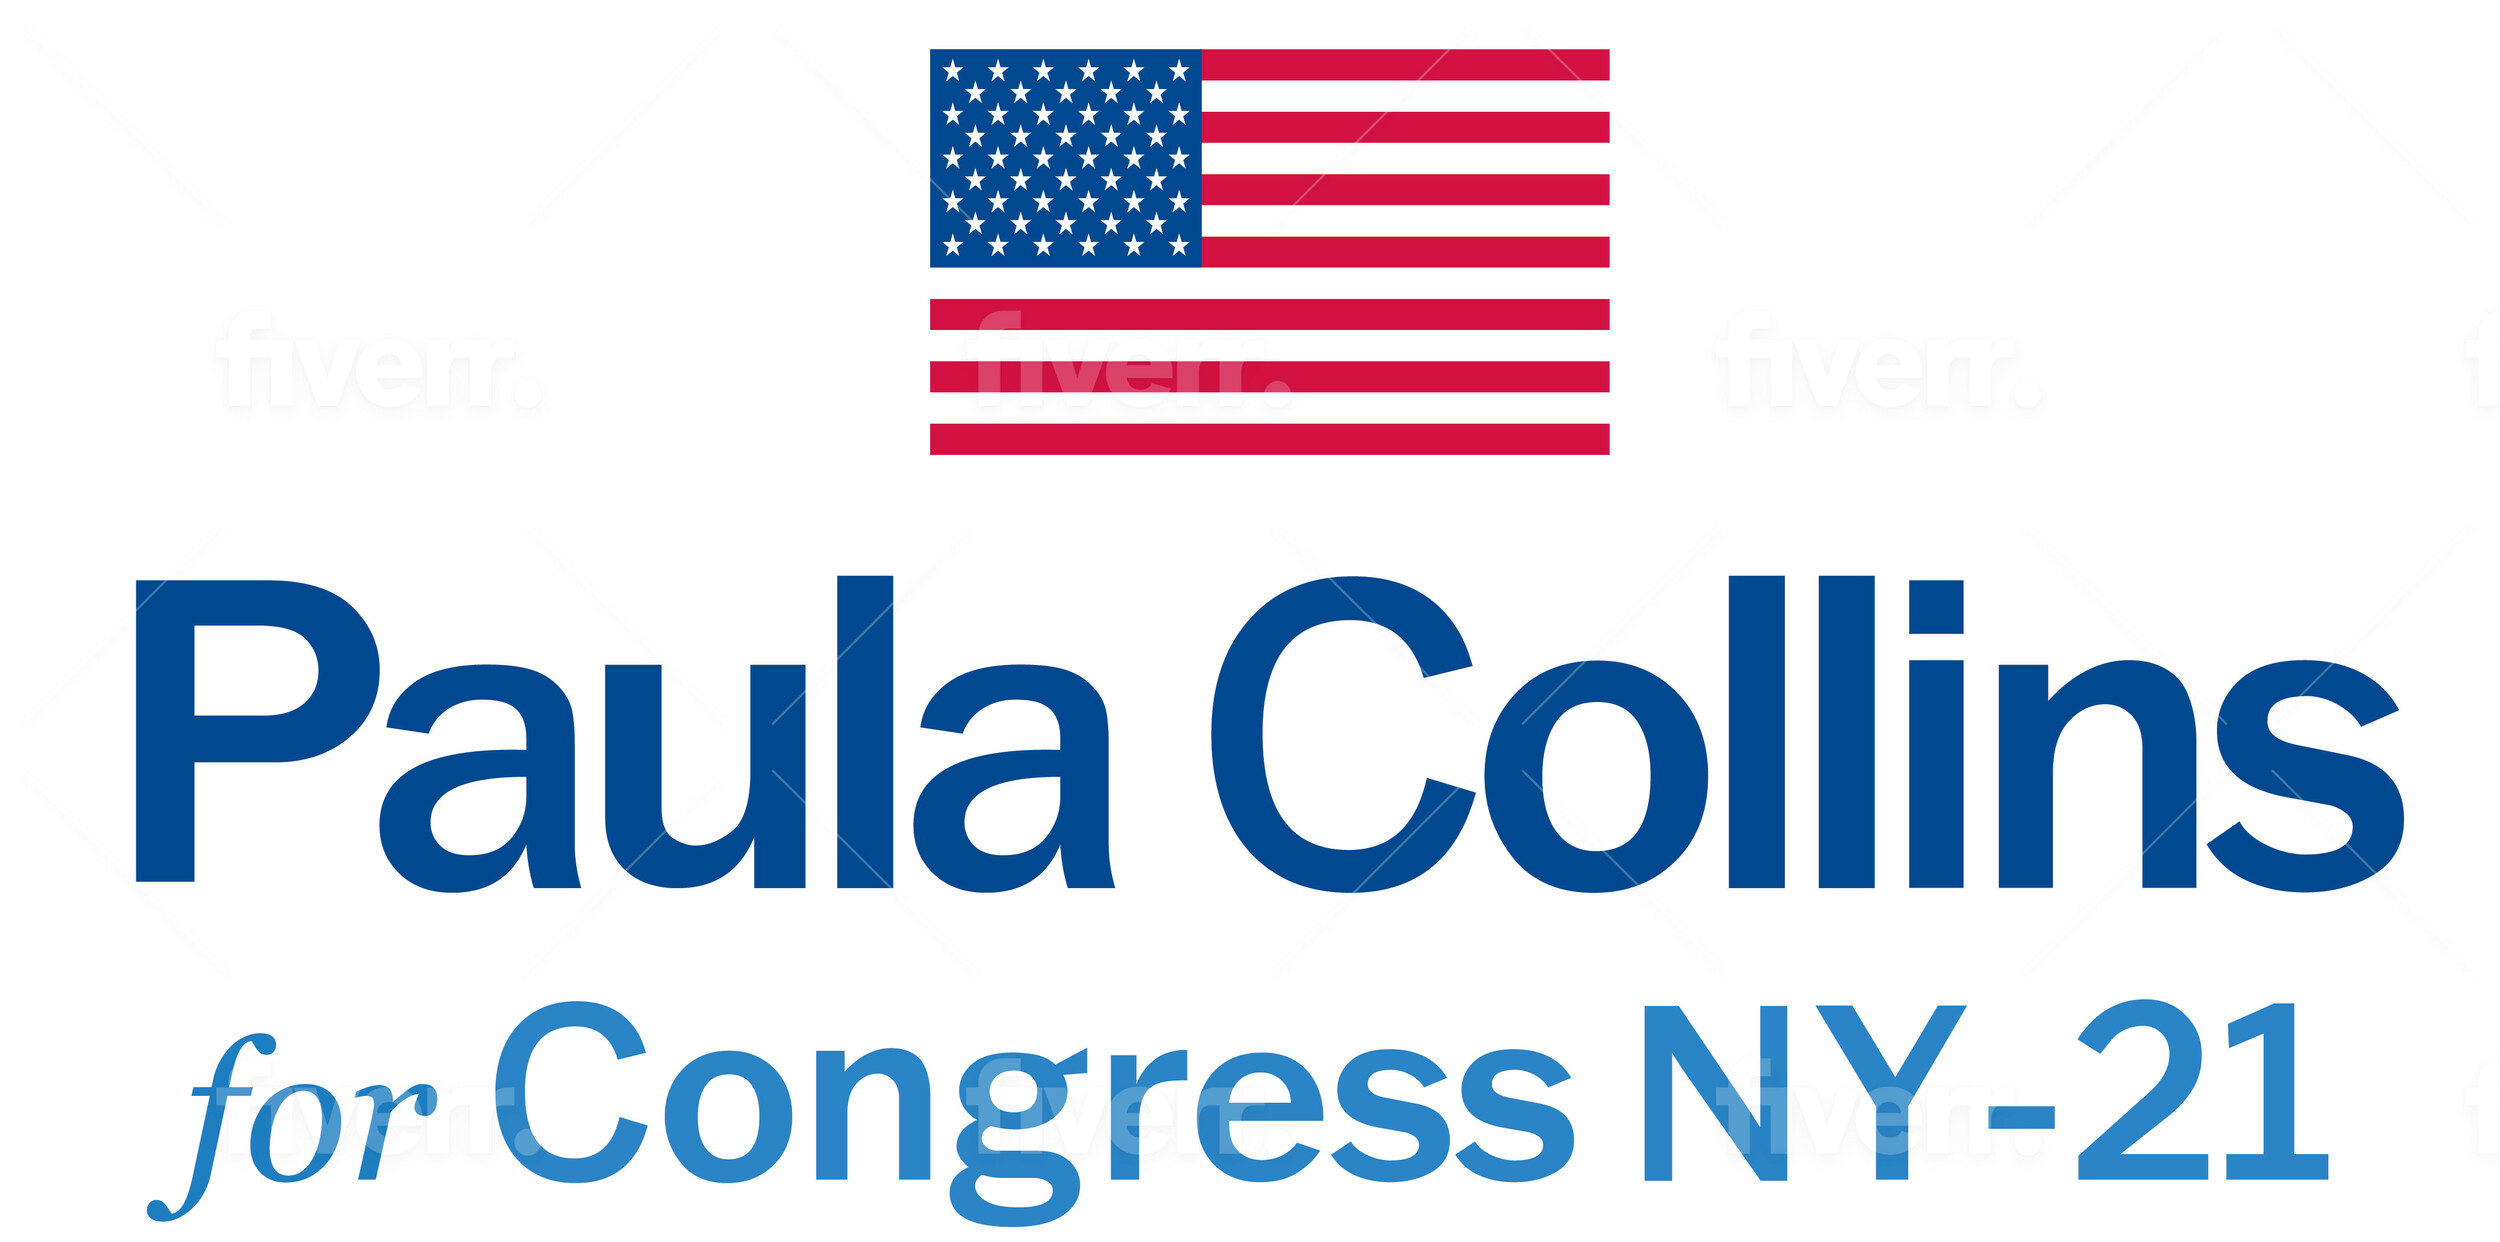 Paula Collins for Congress Ny-21